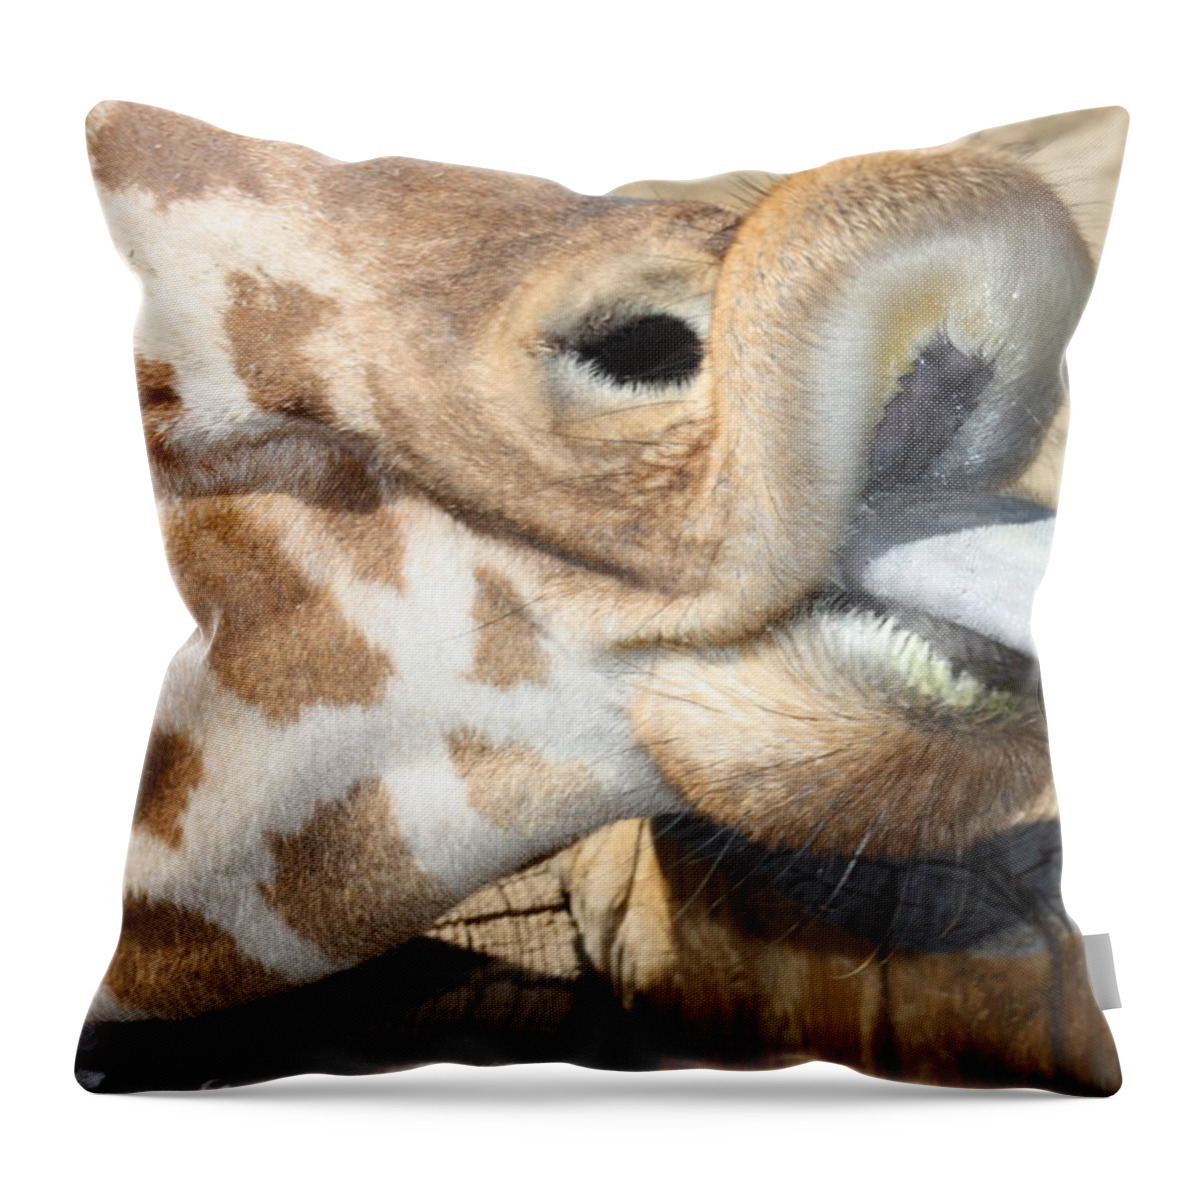 Giraffe Throw Pillow featuring the photograph Pucker Up by Kim Galluzzo Wozniak